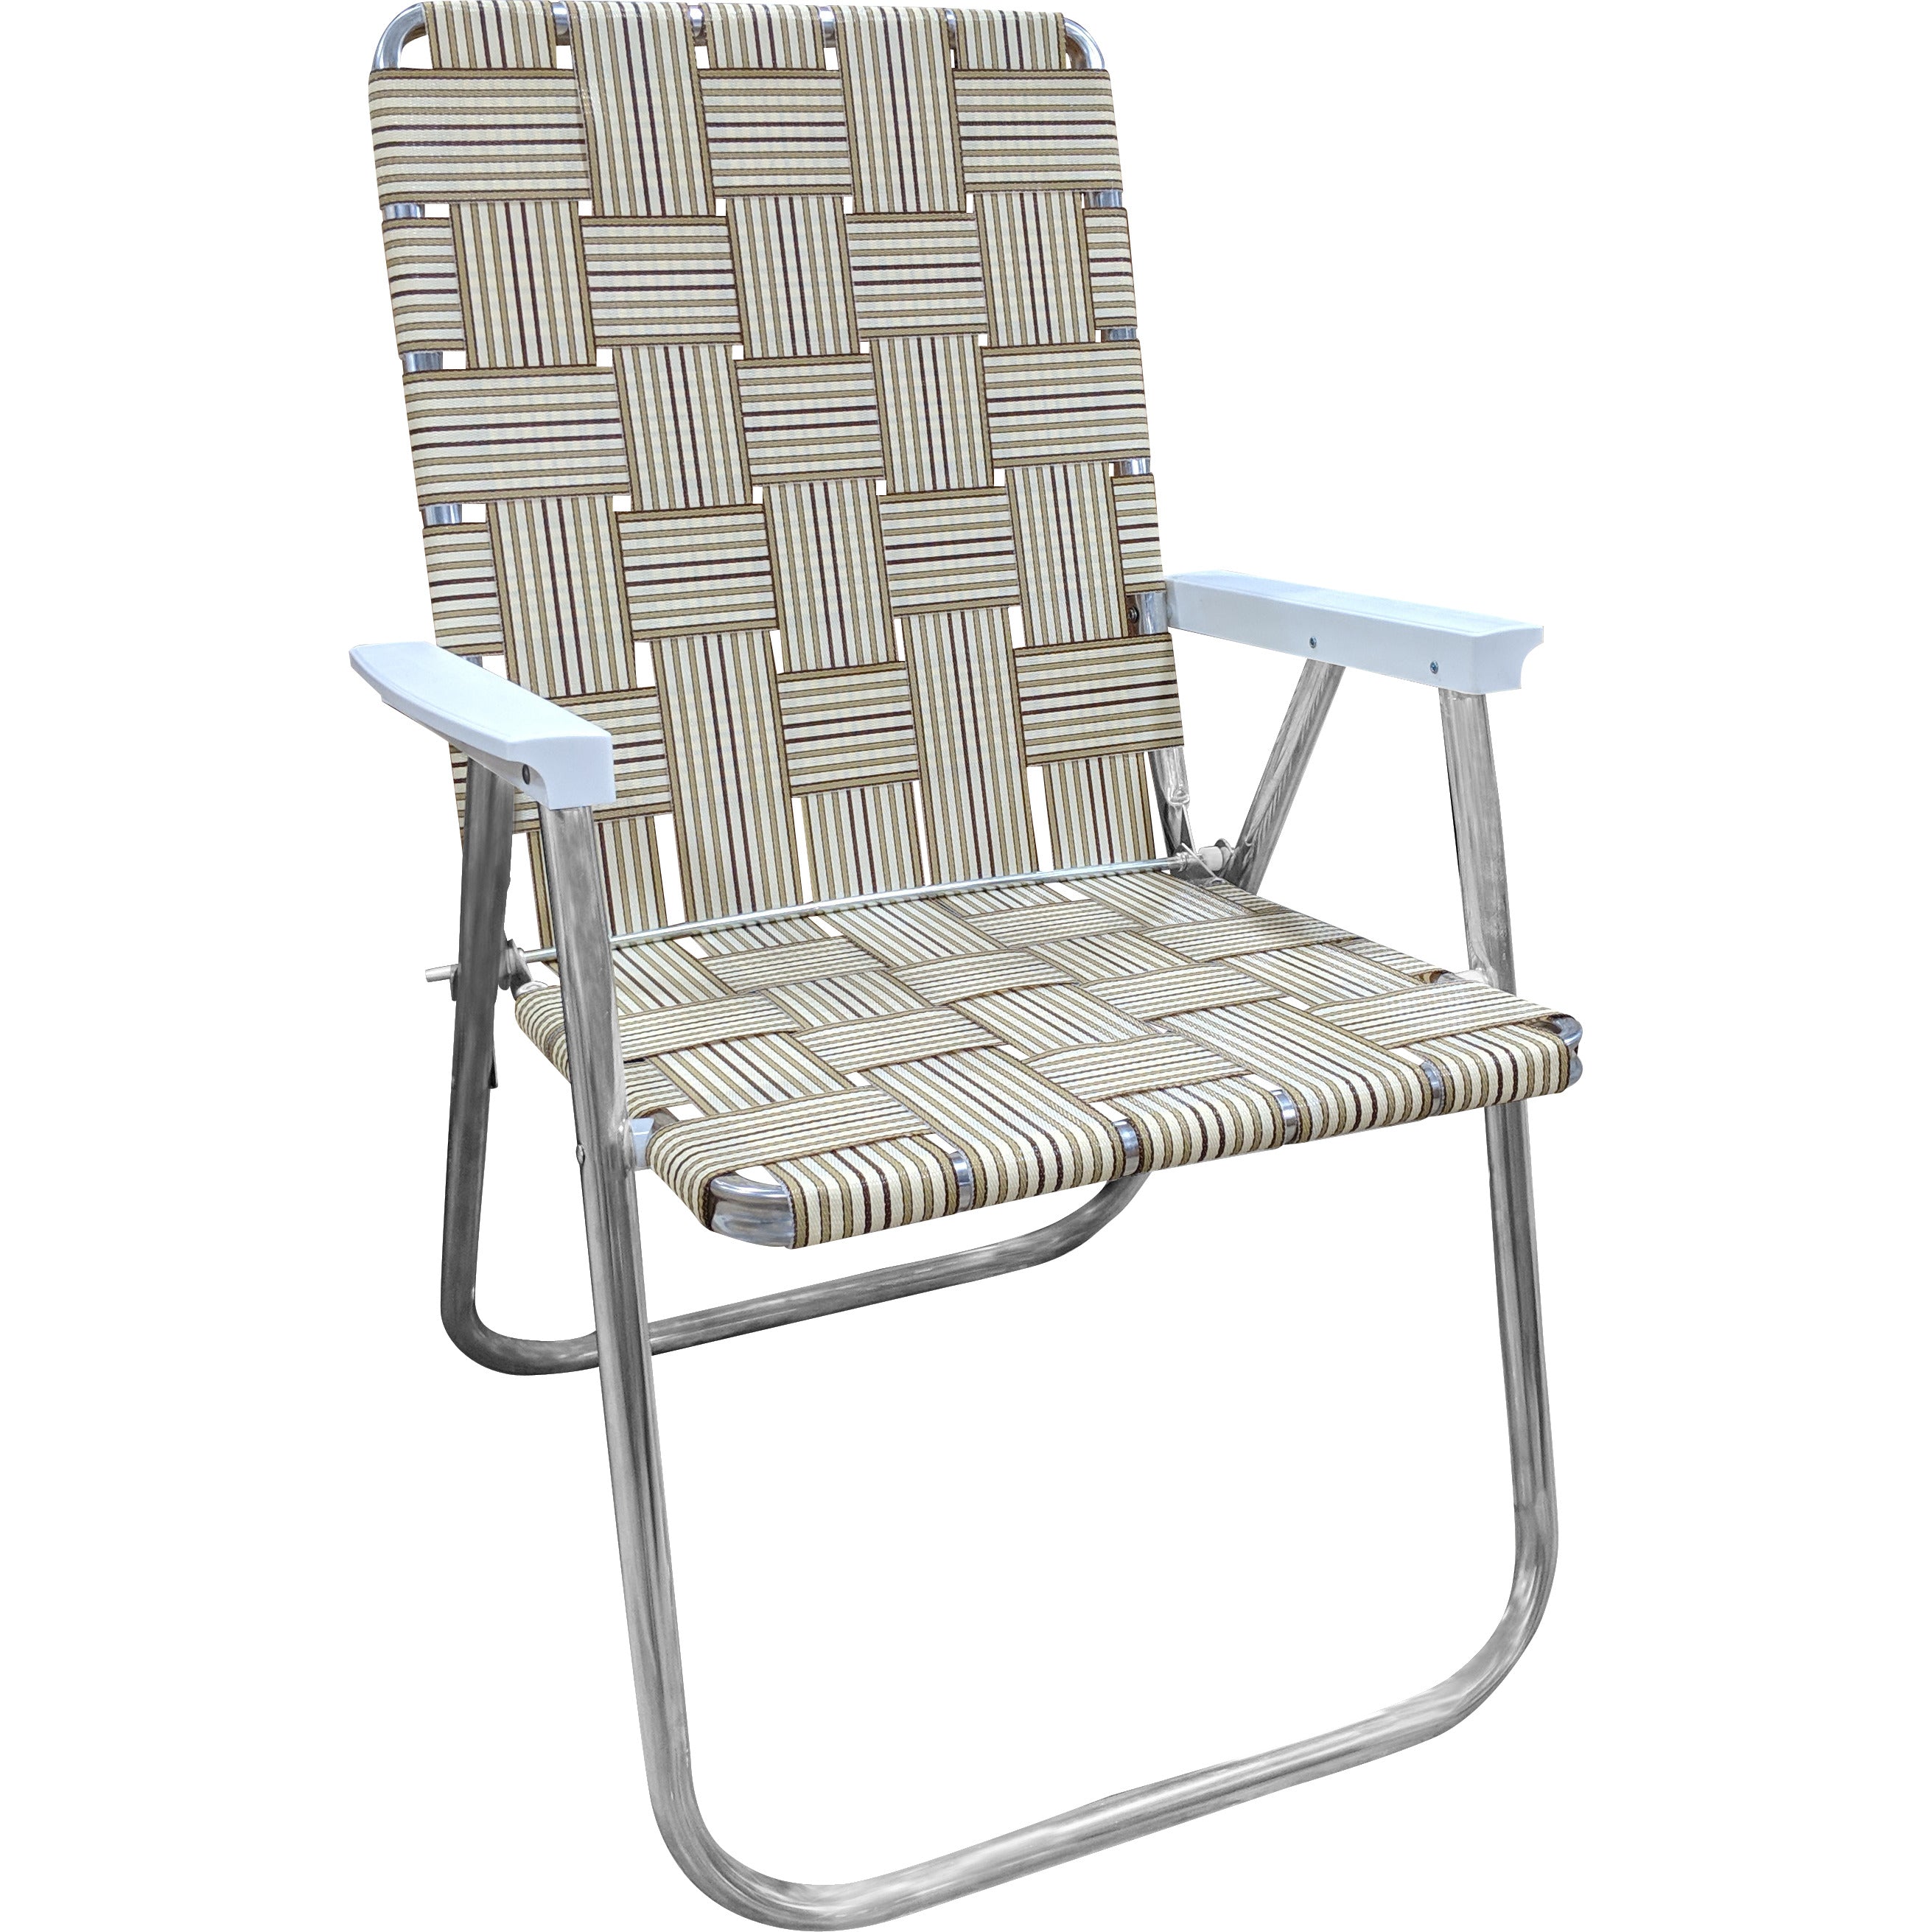 Free Shipping - Tan Classic Lawn Chairs | Lawn Chair USA